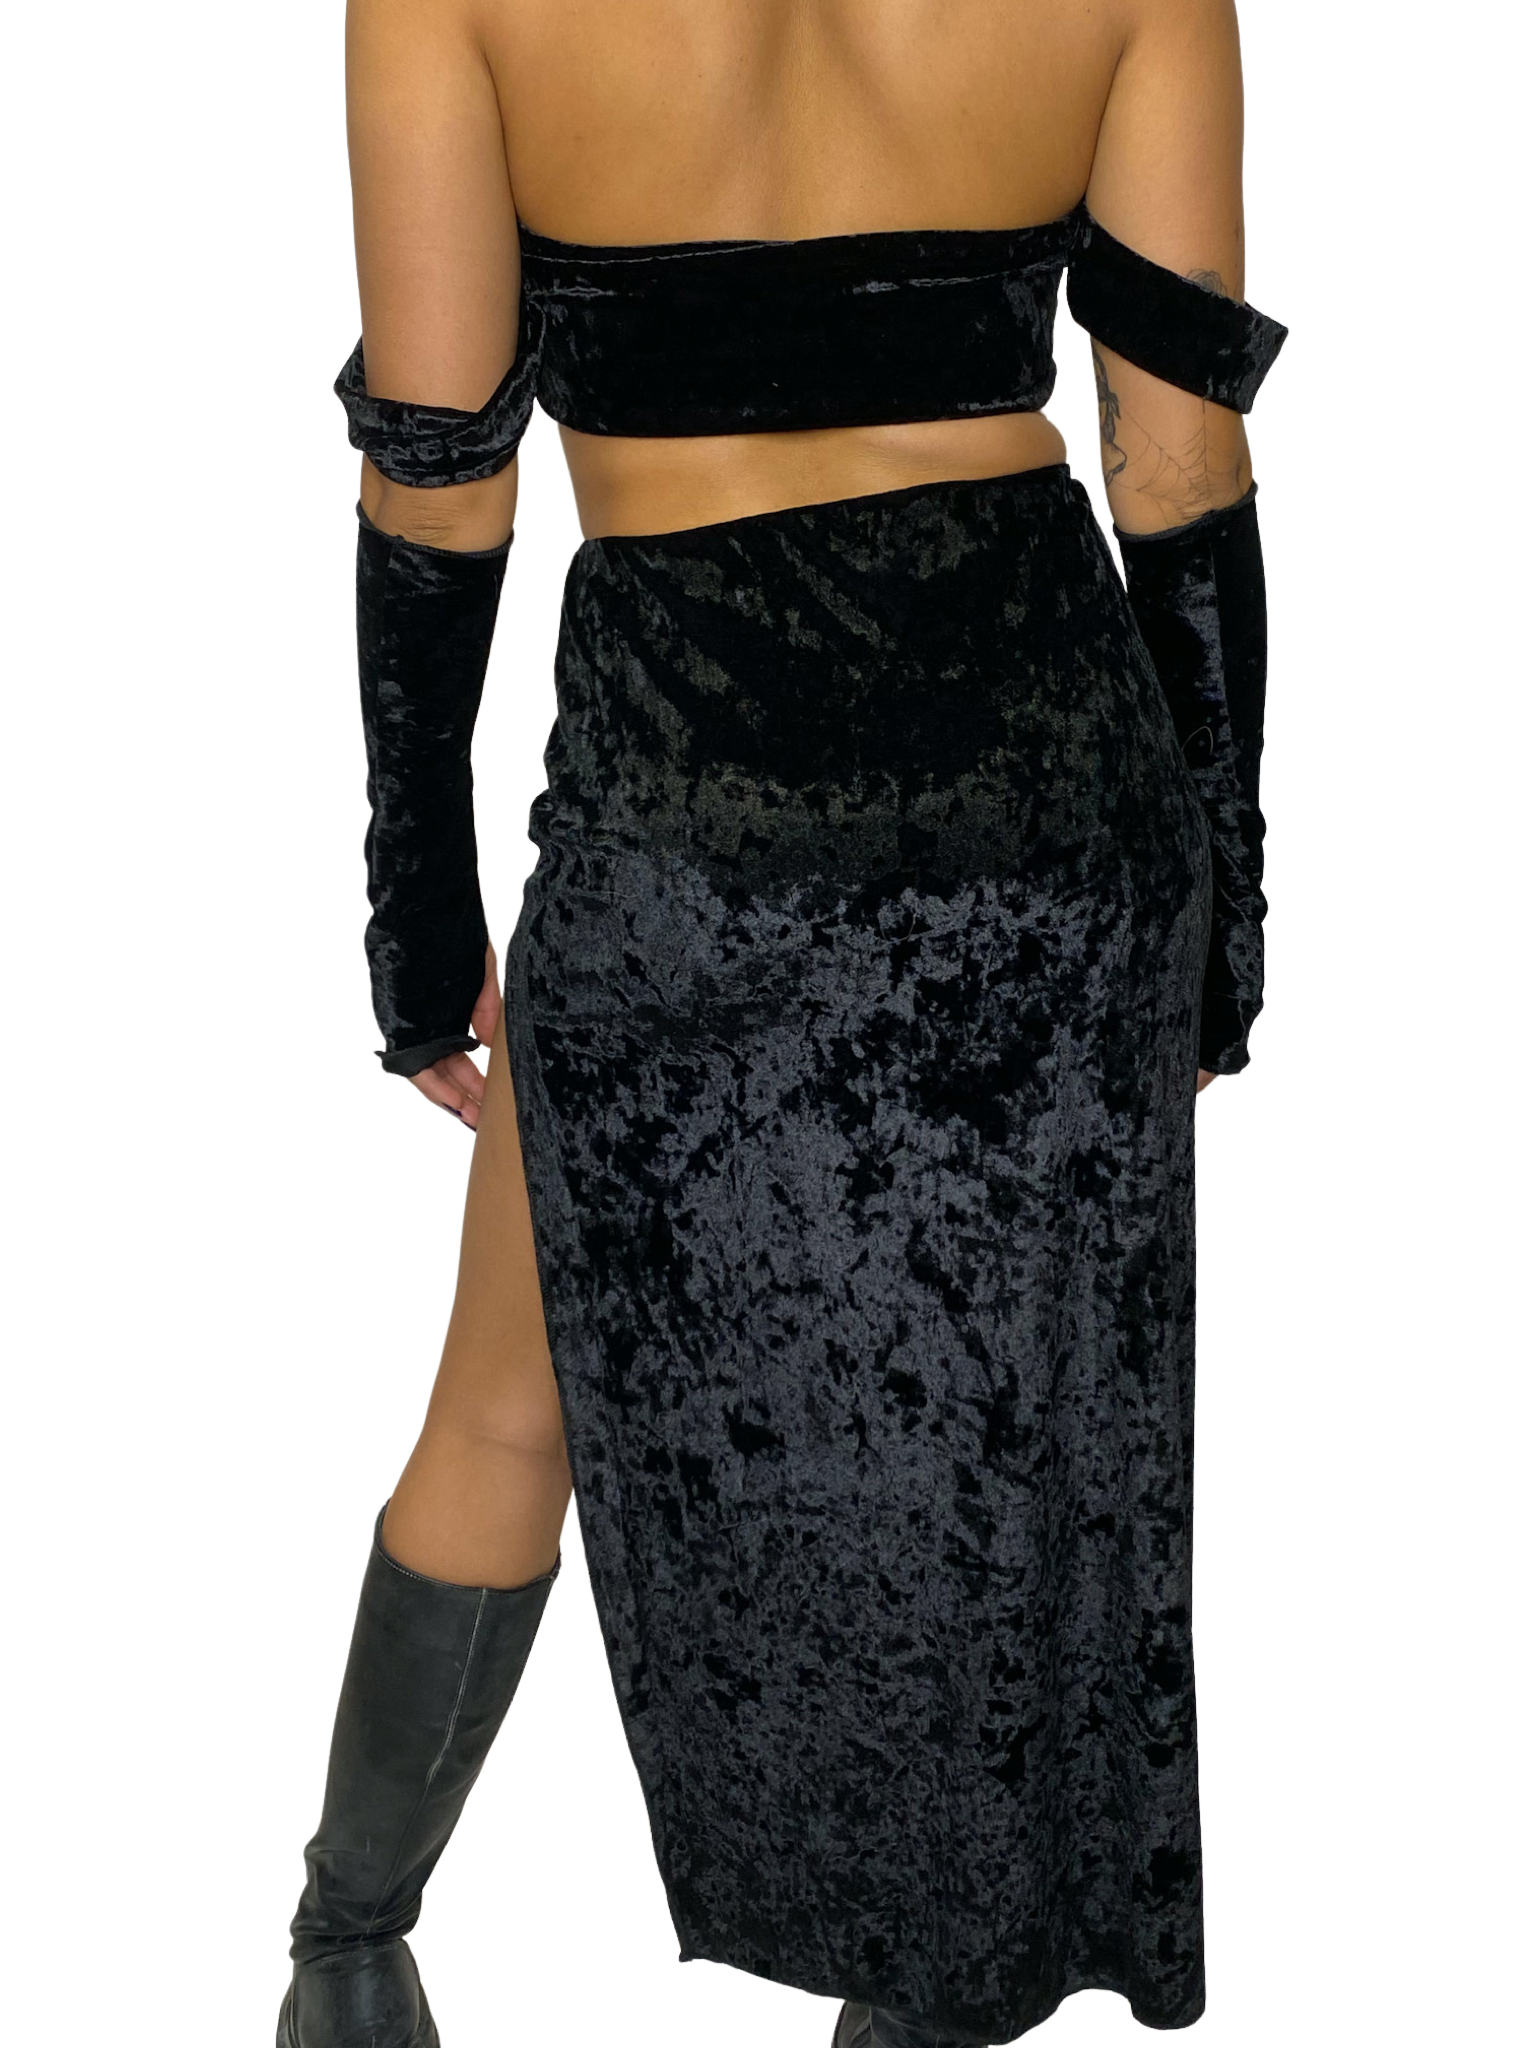 Diosa Black Crushed Velvet Arm Sleeves arm sleeves oraingopartners   